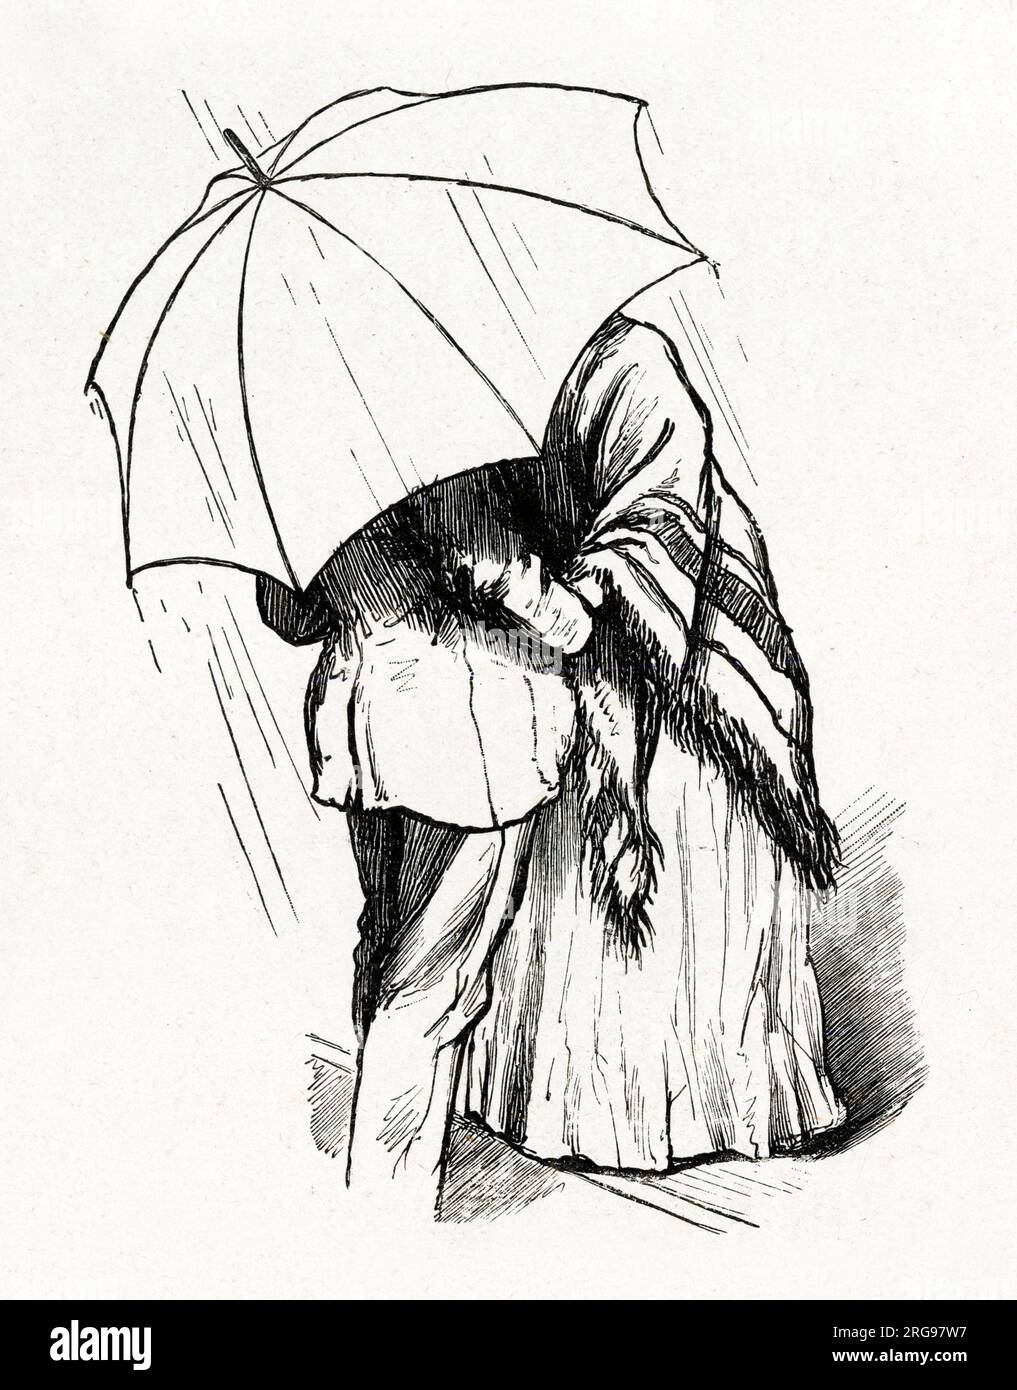 'Little Women' by Louisa May Alcott - Jo and Fritz (Professor Bhaer) reunited under an umbrella. Stock Photo